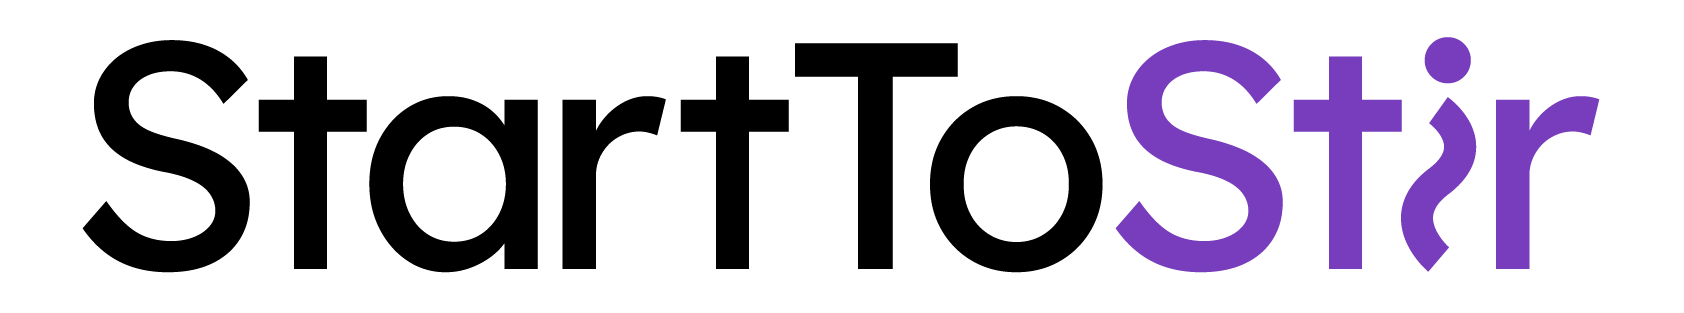 Sts logo colour black rgb